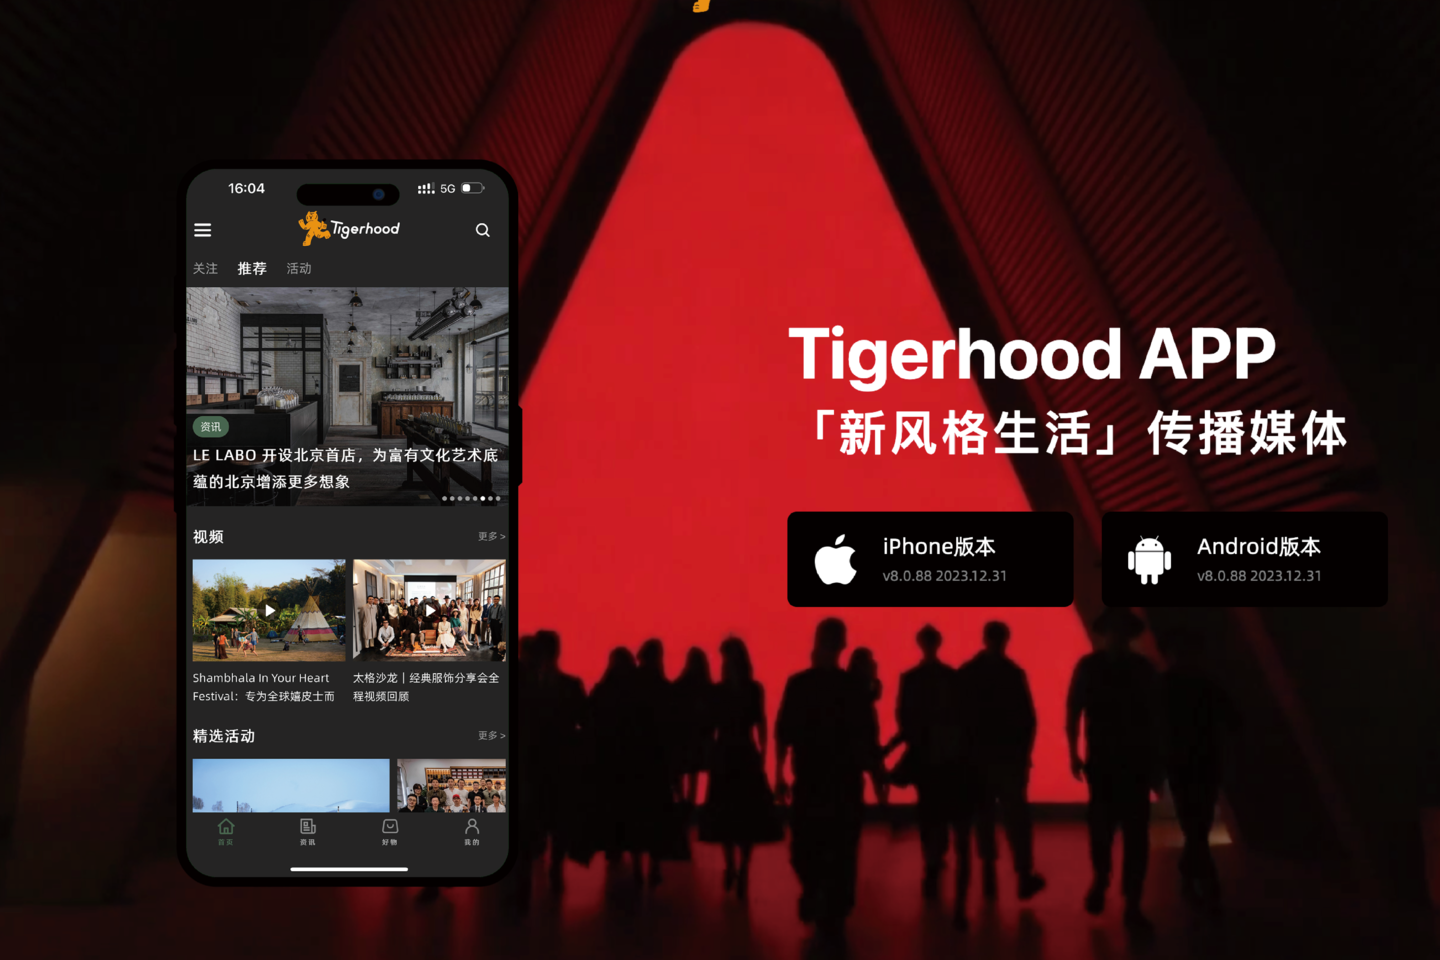 Tigerhood APP 新版本版本更新 用户发帖功能恢复